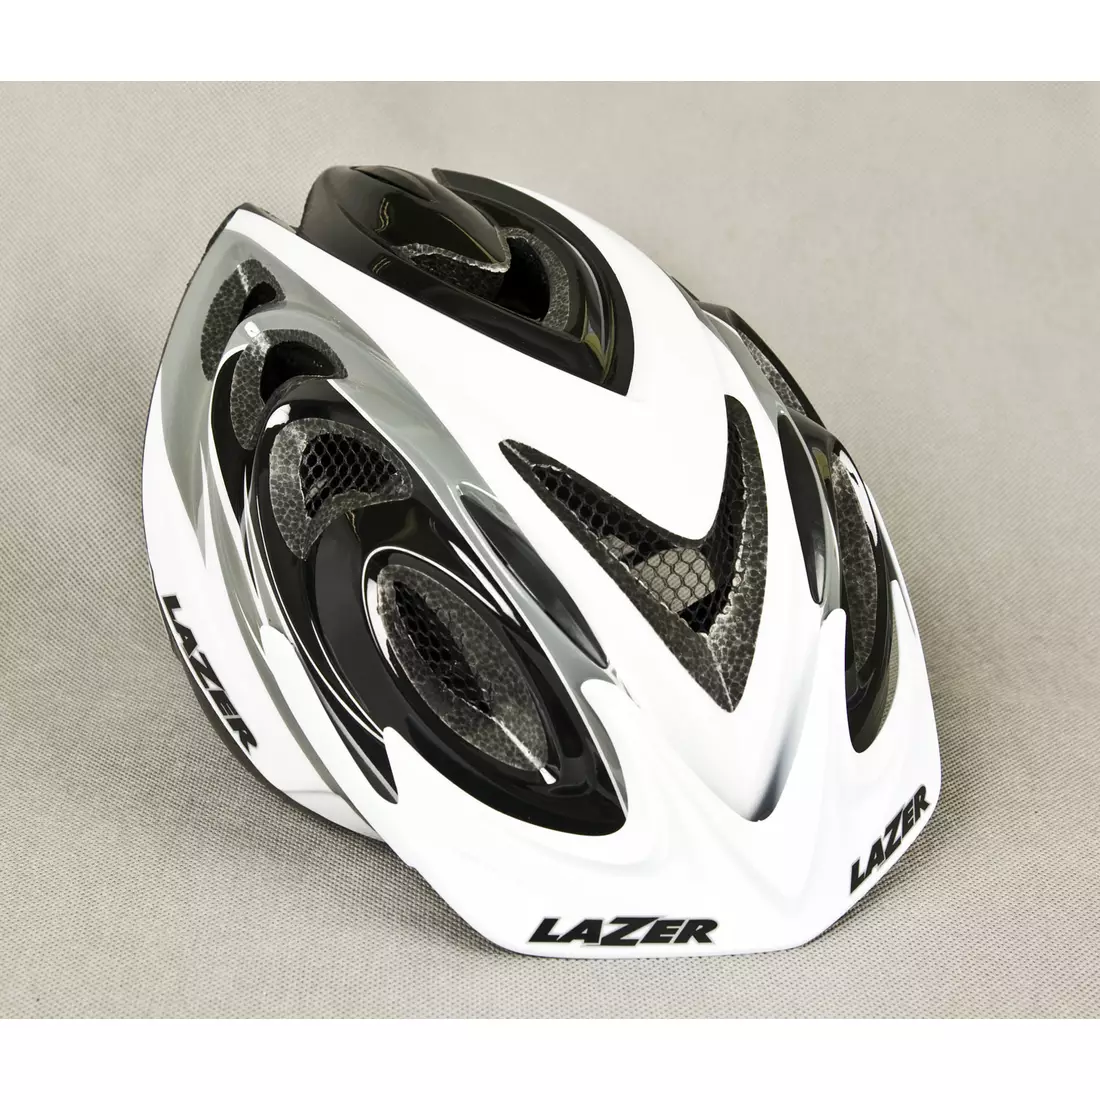 LAZER - MTB cyklistická přilba 2X3M, barva: šedo bílá černá